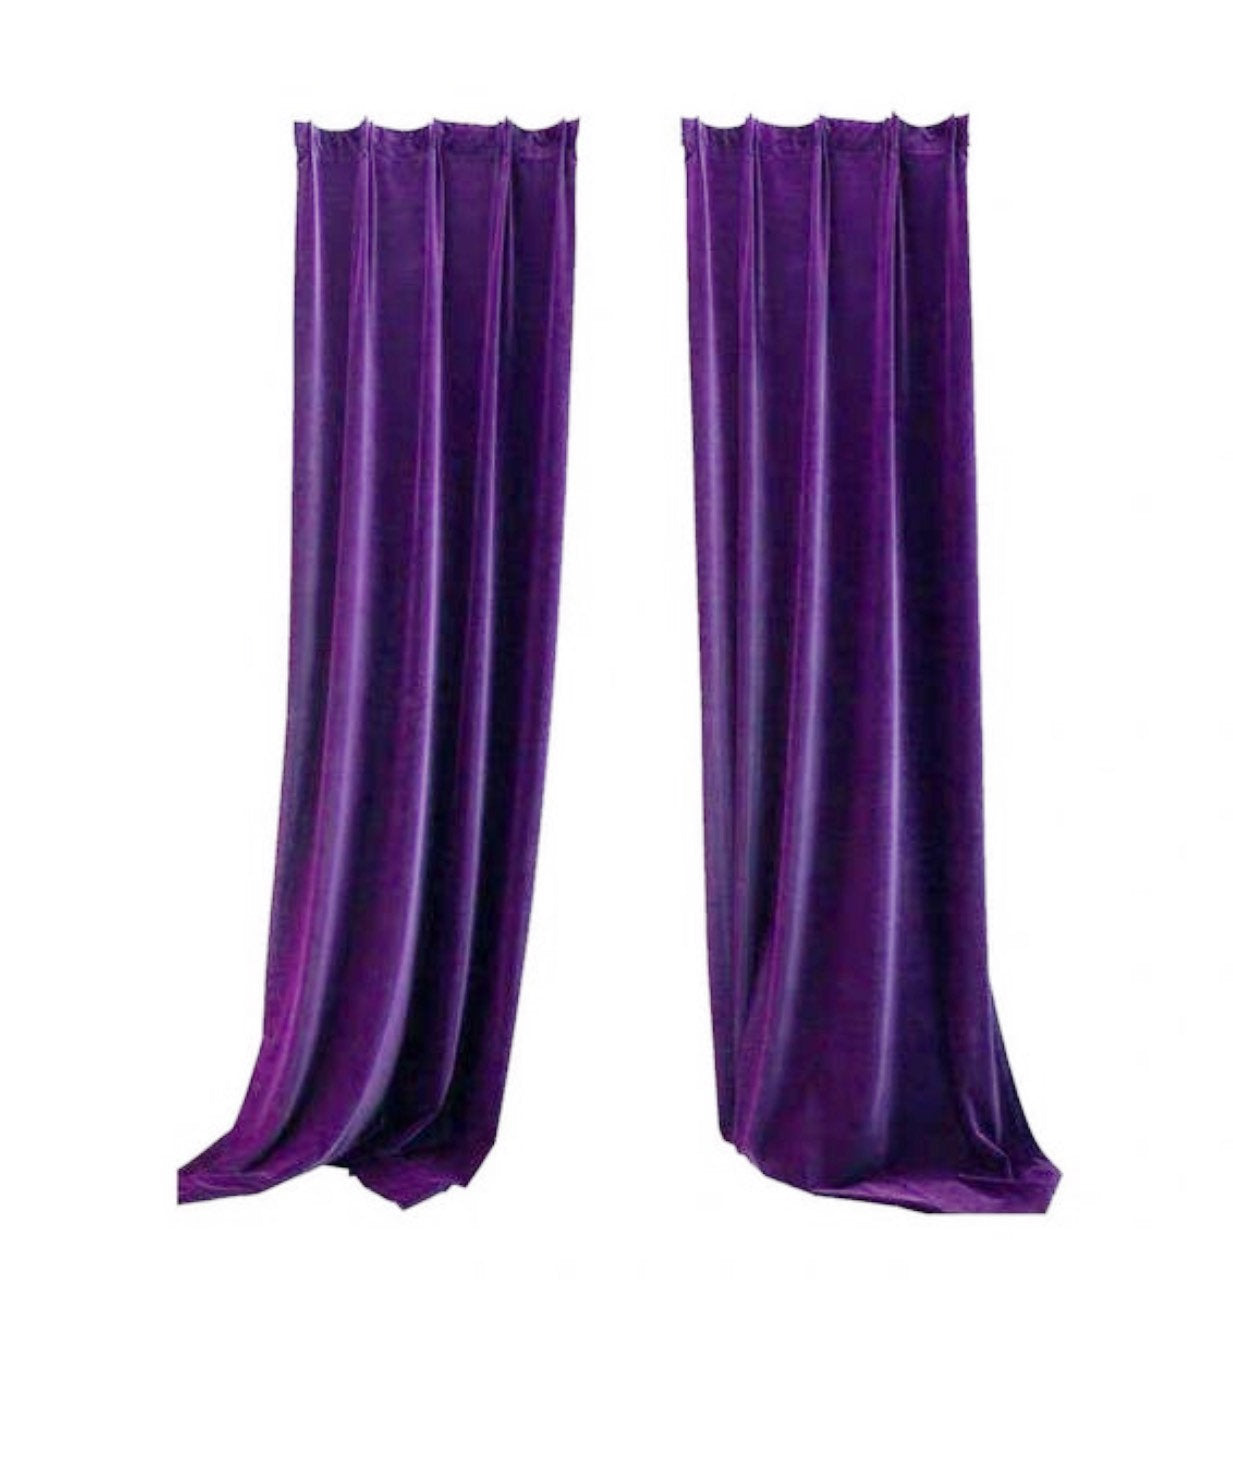 Velvet Curtain | PURPLE Eggplant Blackout Curtain | velvet curtain panels | Curtain Panels | Custom Curtains